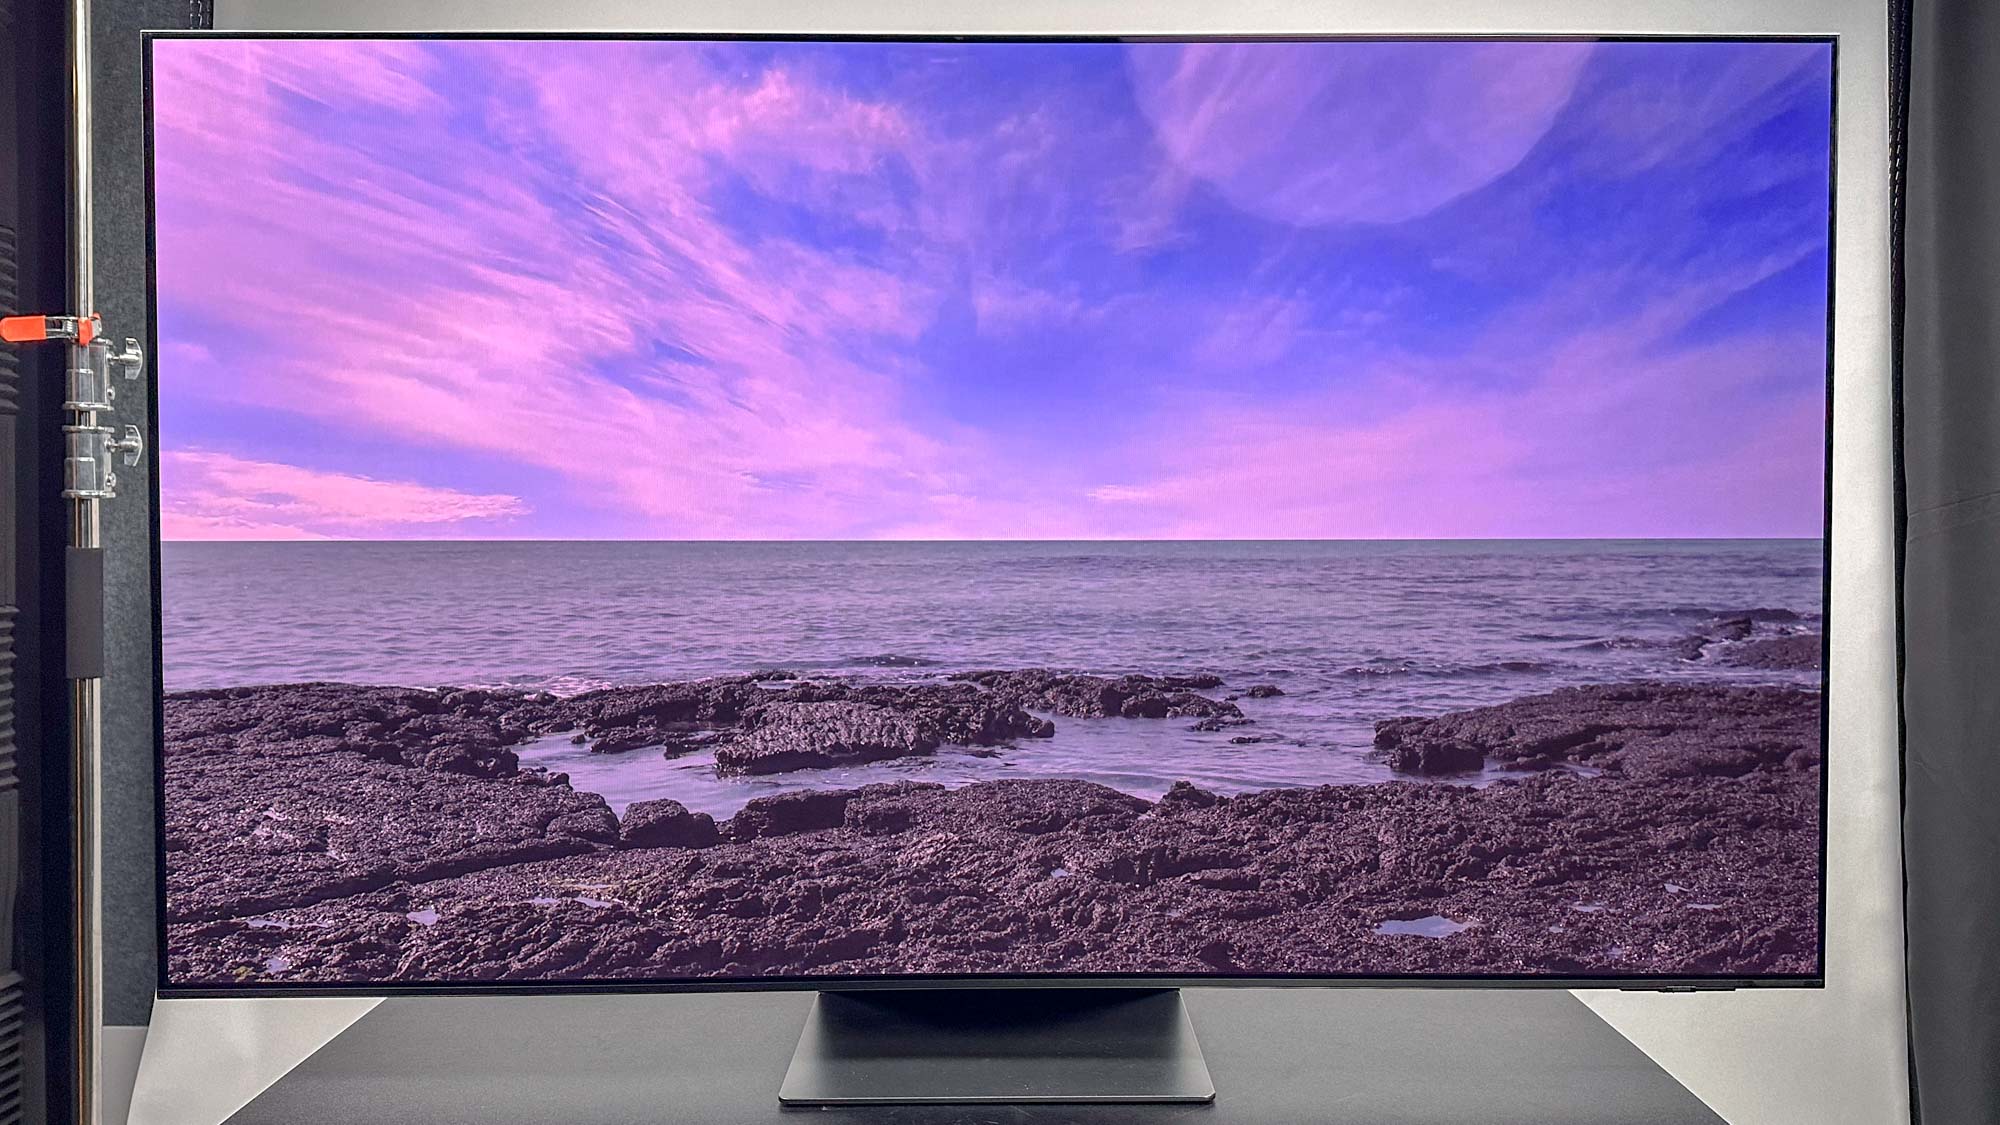 Samsung S95C OLED TV